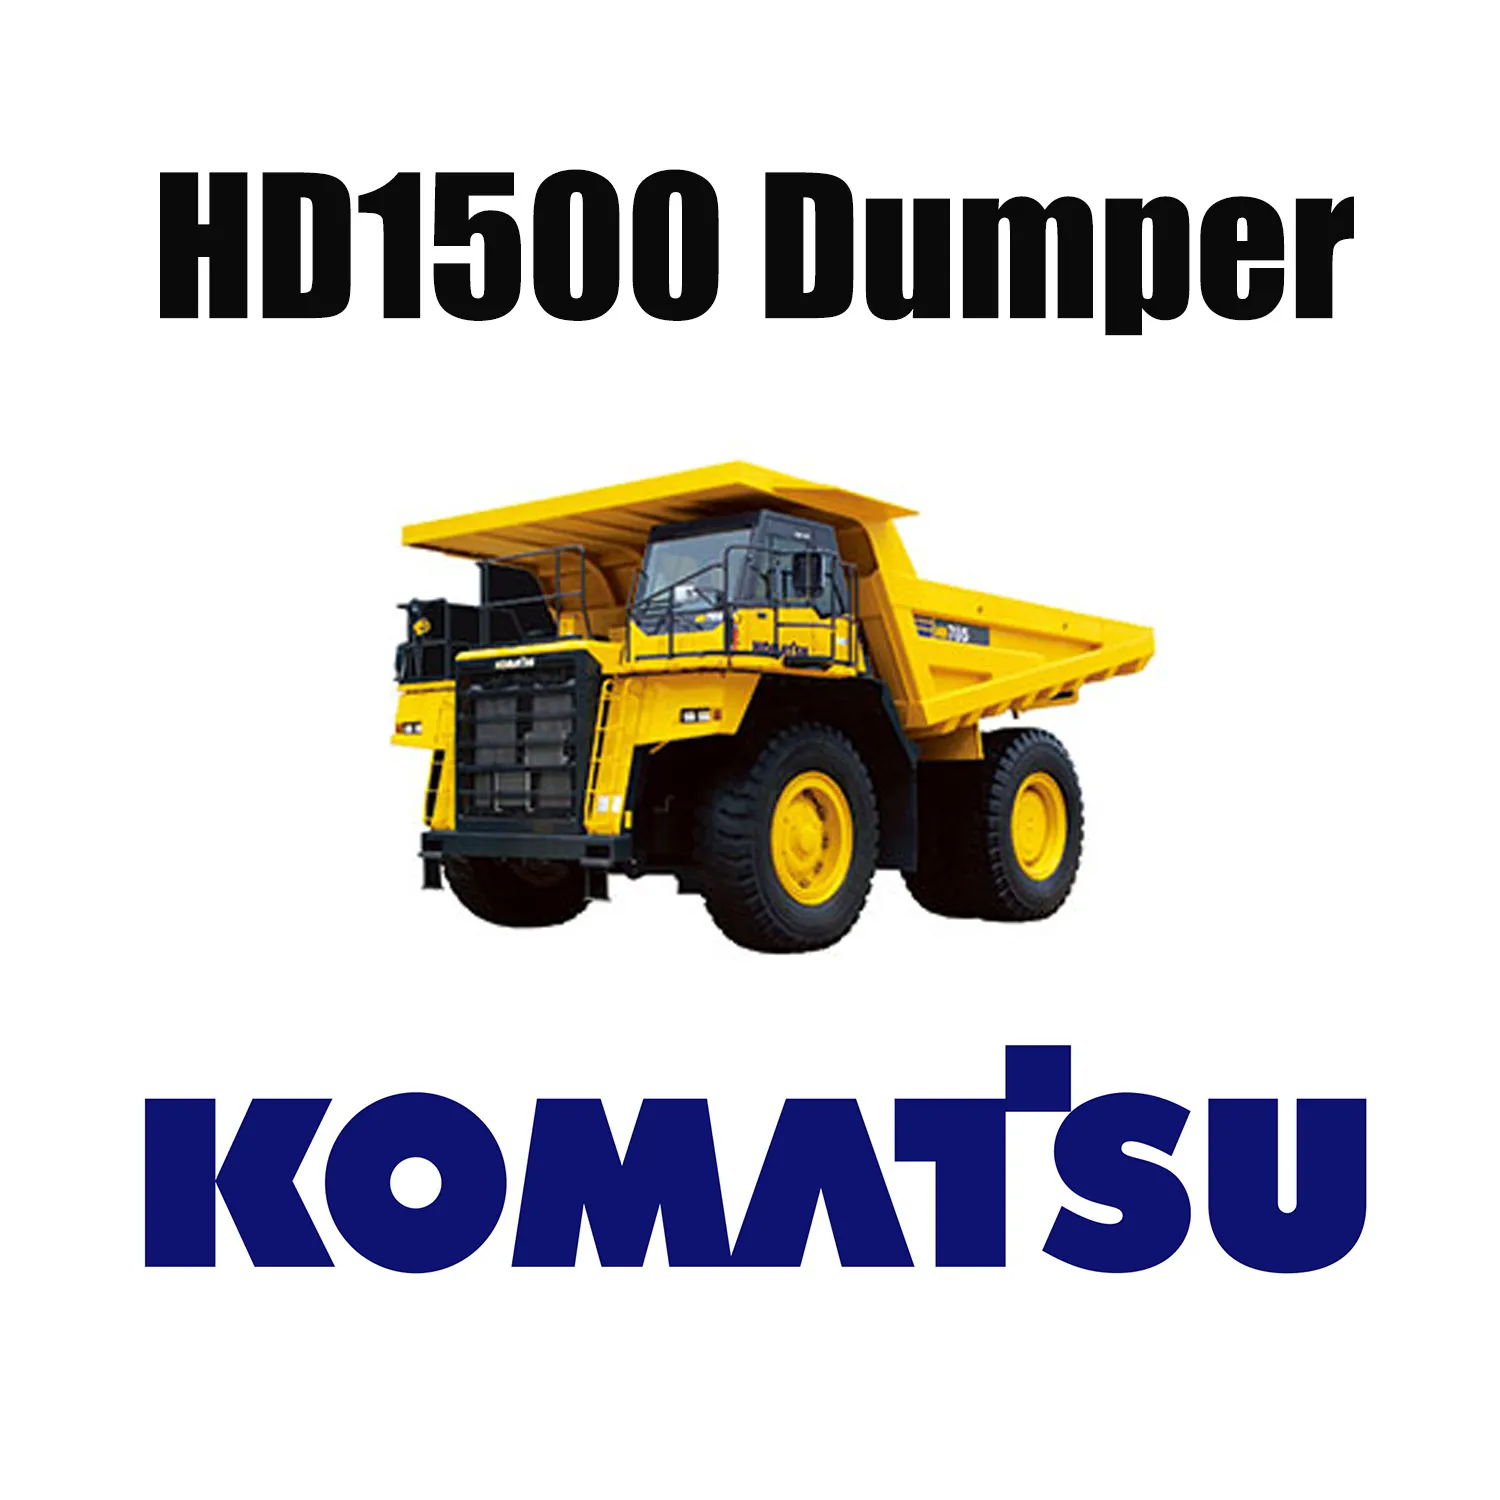 KOMATSU HD1500 Mechanical Truck mit Specialty EarthMover-Reifen 33.00R51